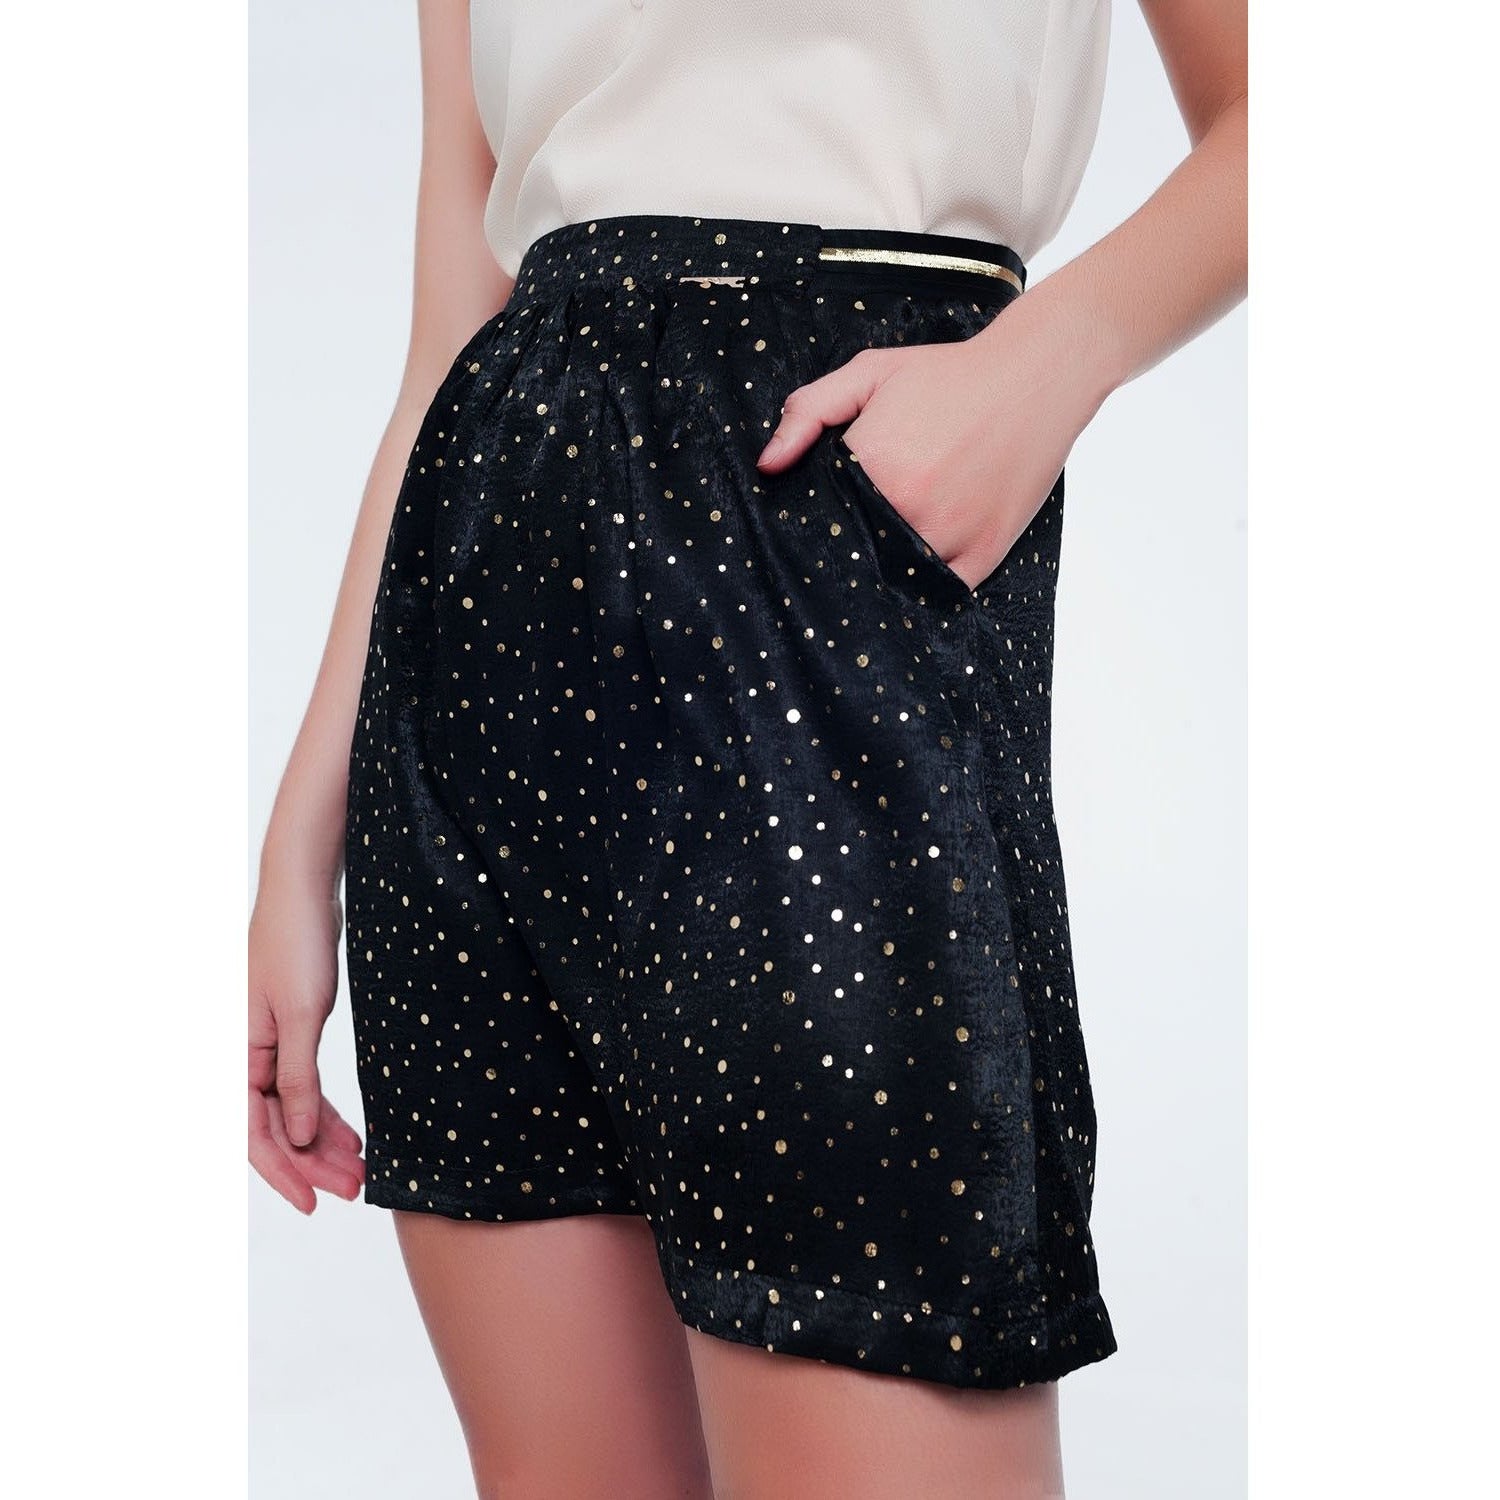 Black Mini Skirt with Gold Polka Dots